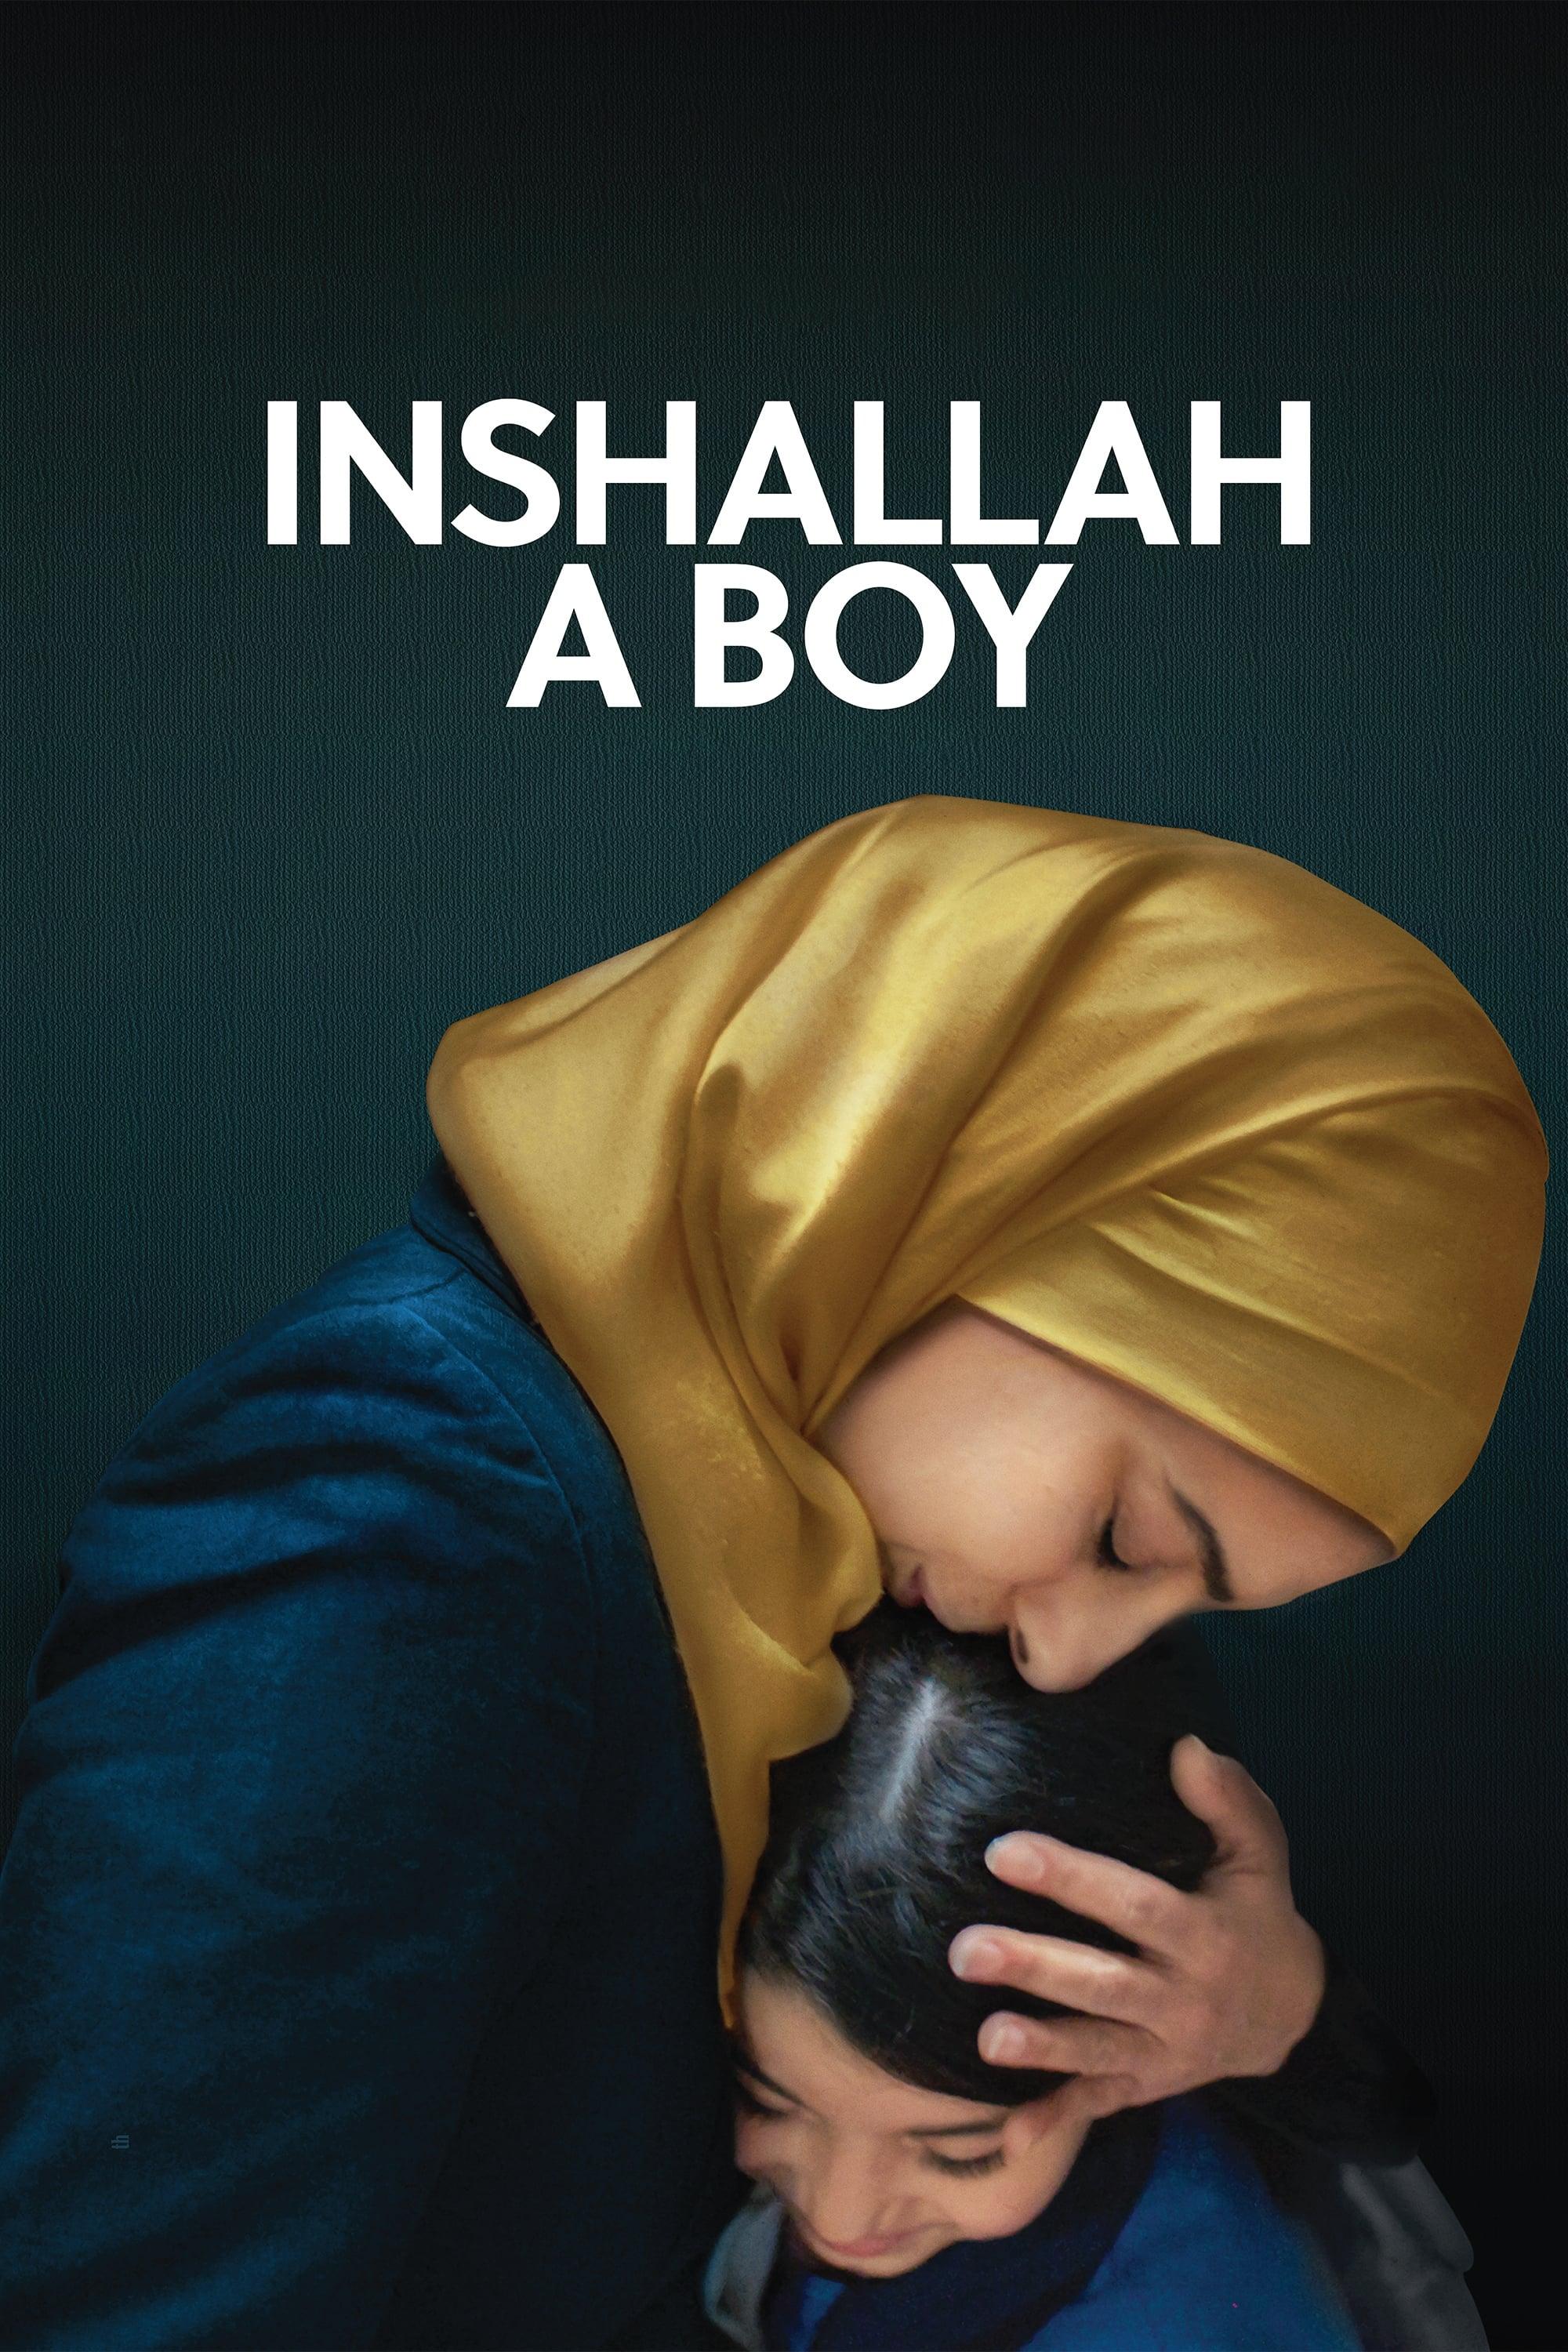 Inshallah a Boy poster